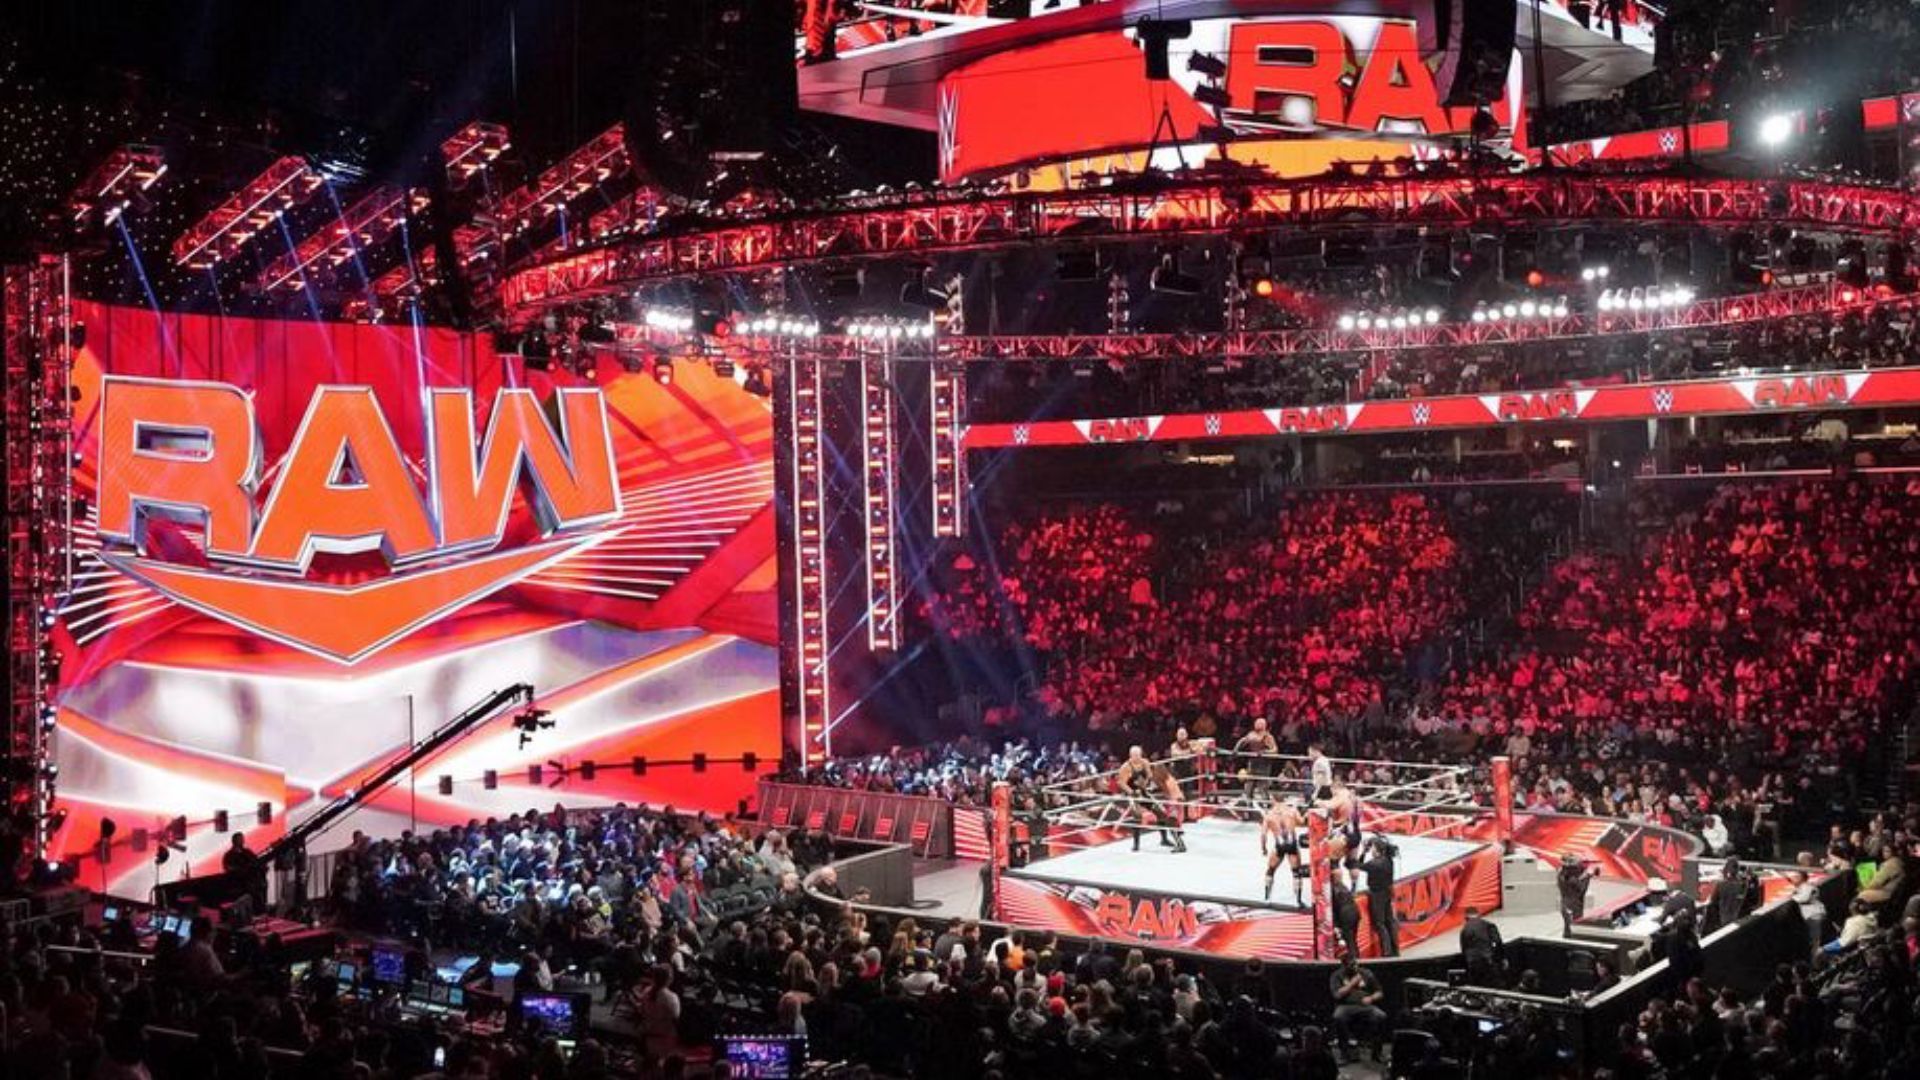 WWE RAW Arena. Image Credits: X